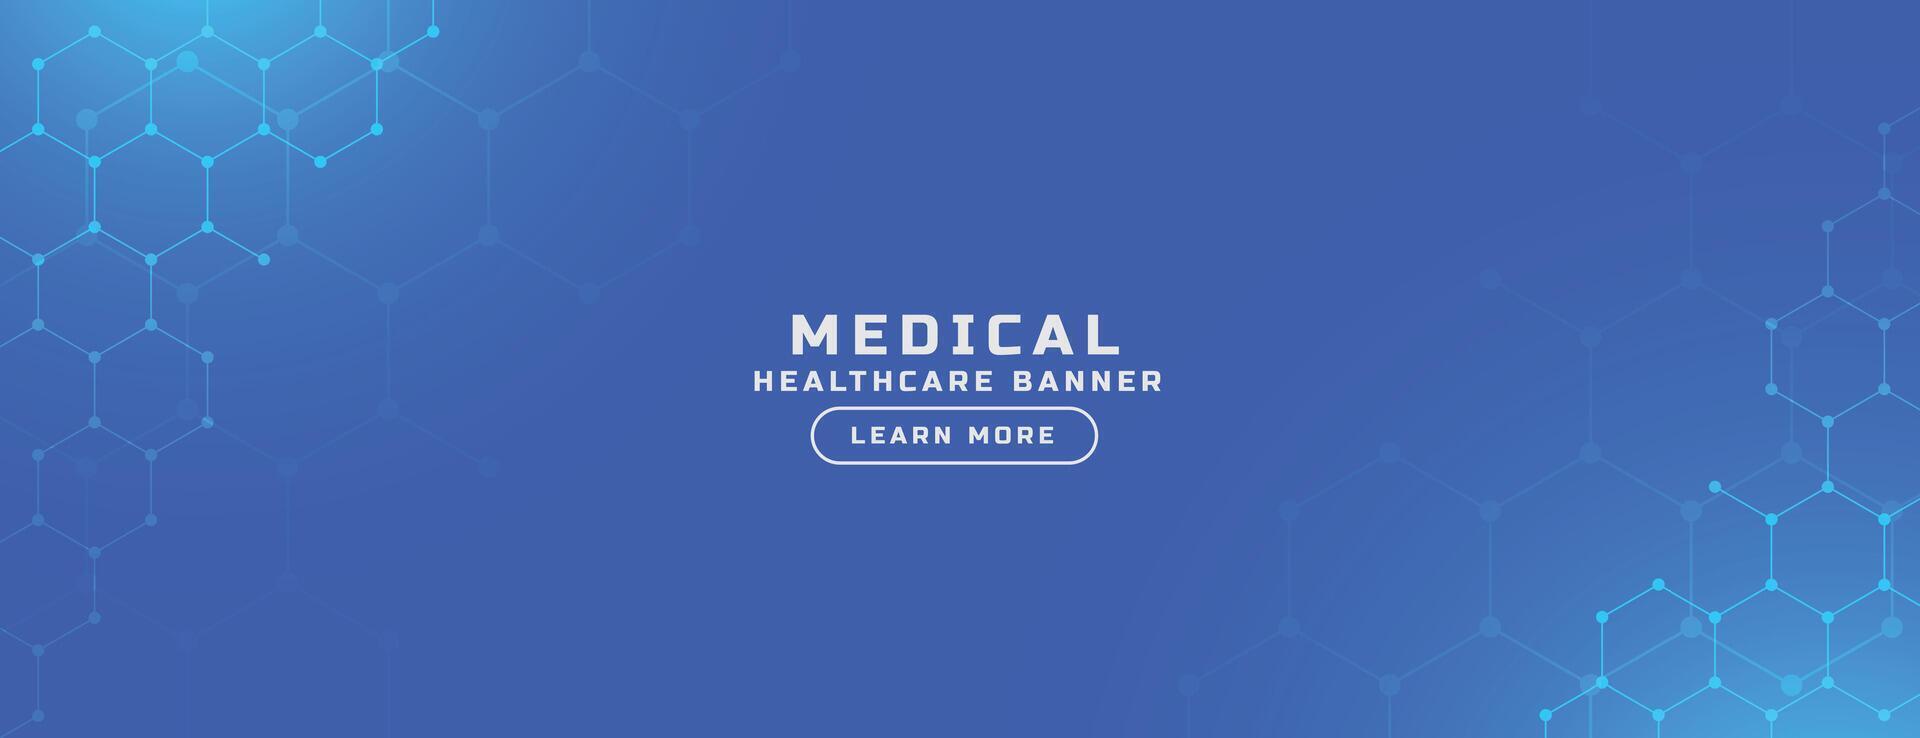 moderno médico Cuidado azul bandeira para farmacia ou laboratório pano de fundo vetor